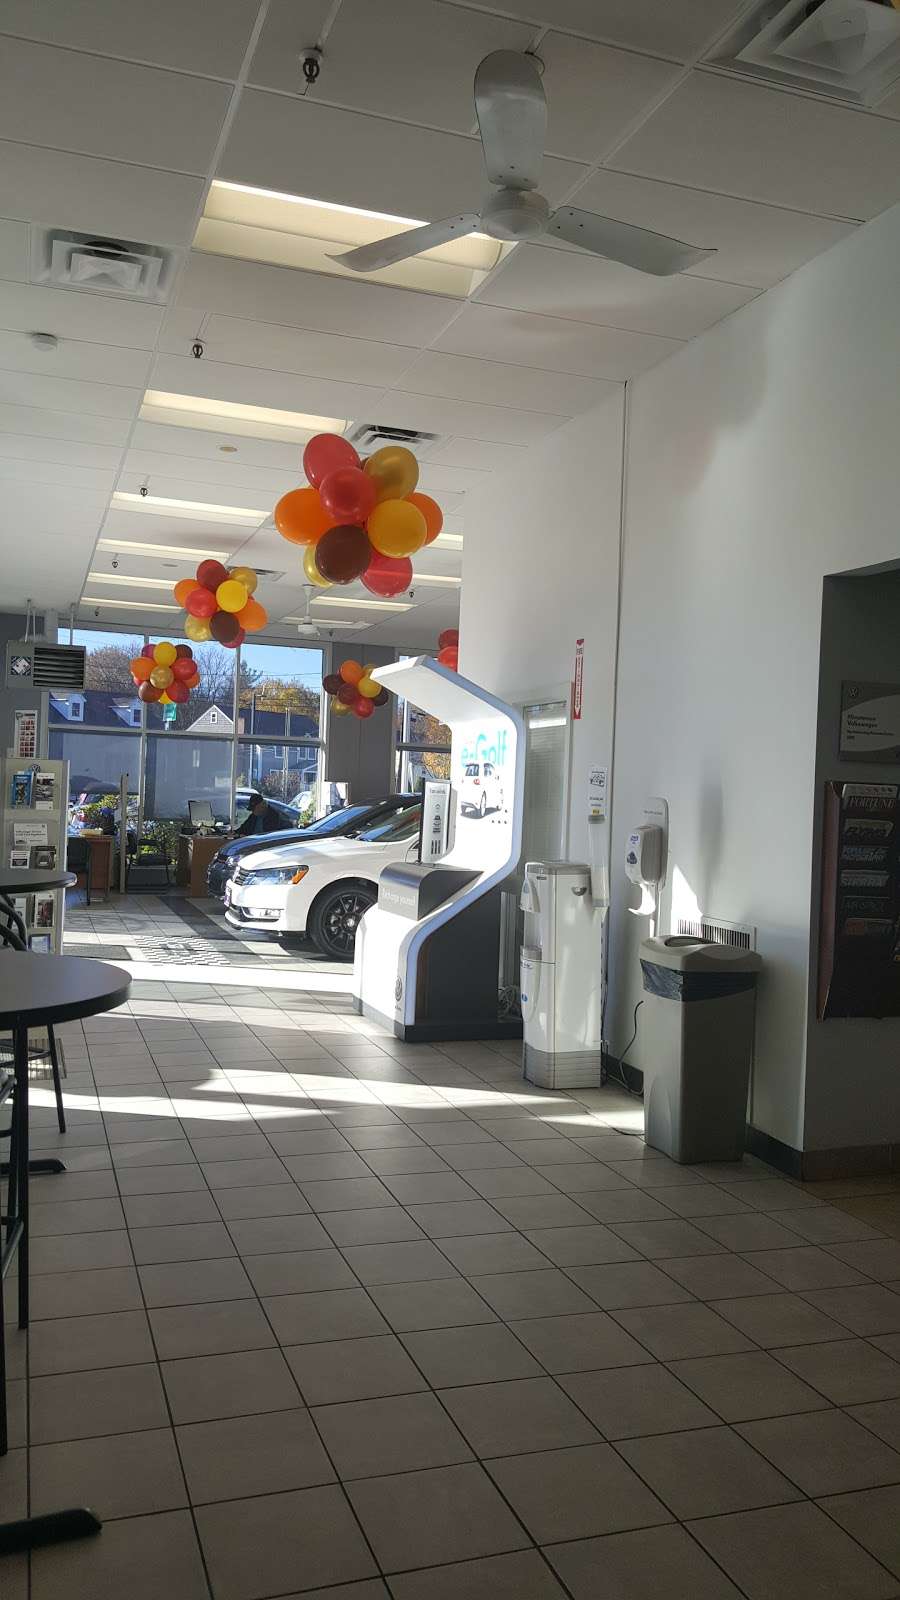 Minuteman Volkswagen | 39 North Rd, Bedford, MA 01730, USA | Phone: (781) 275-8000